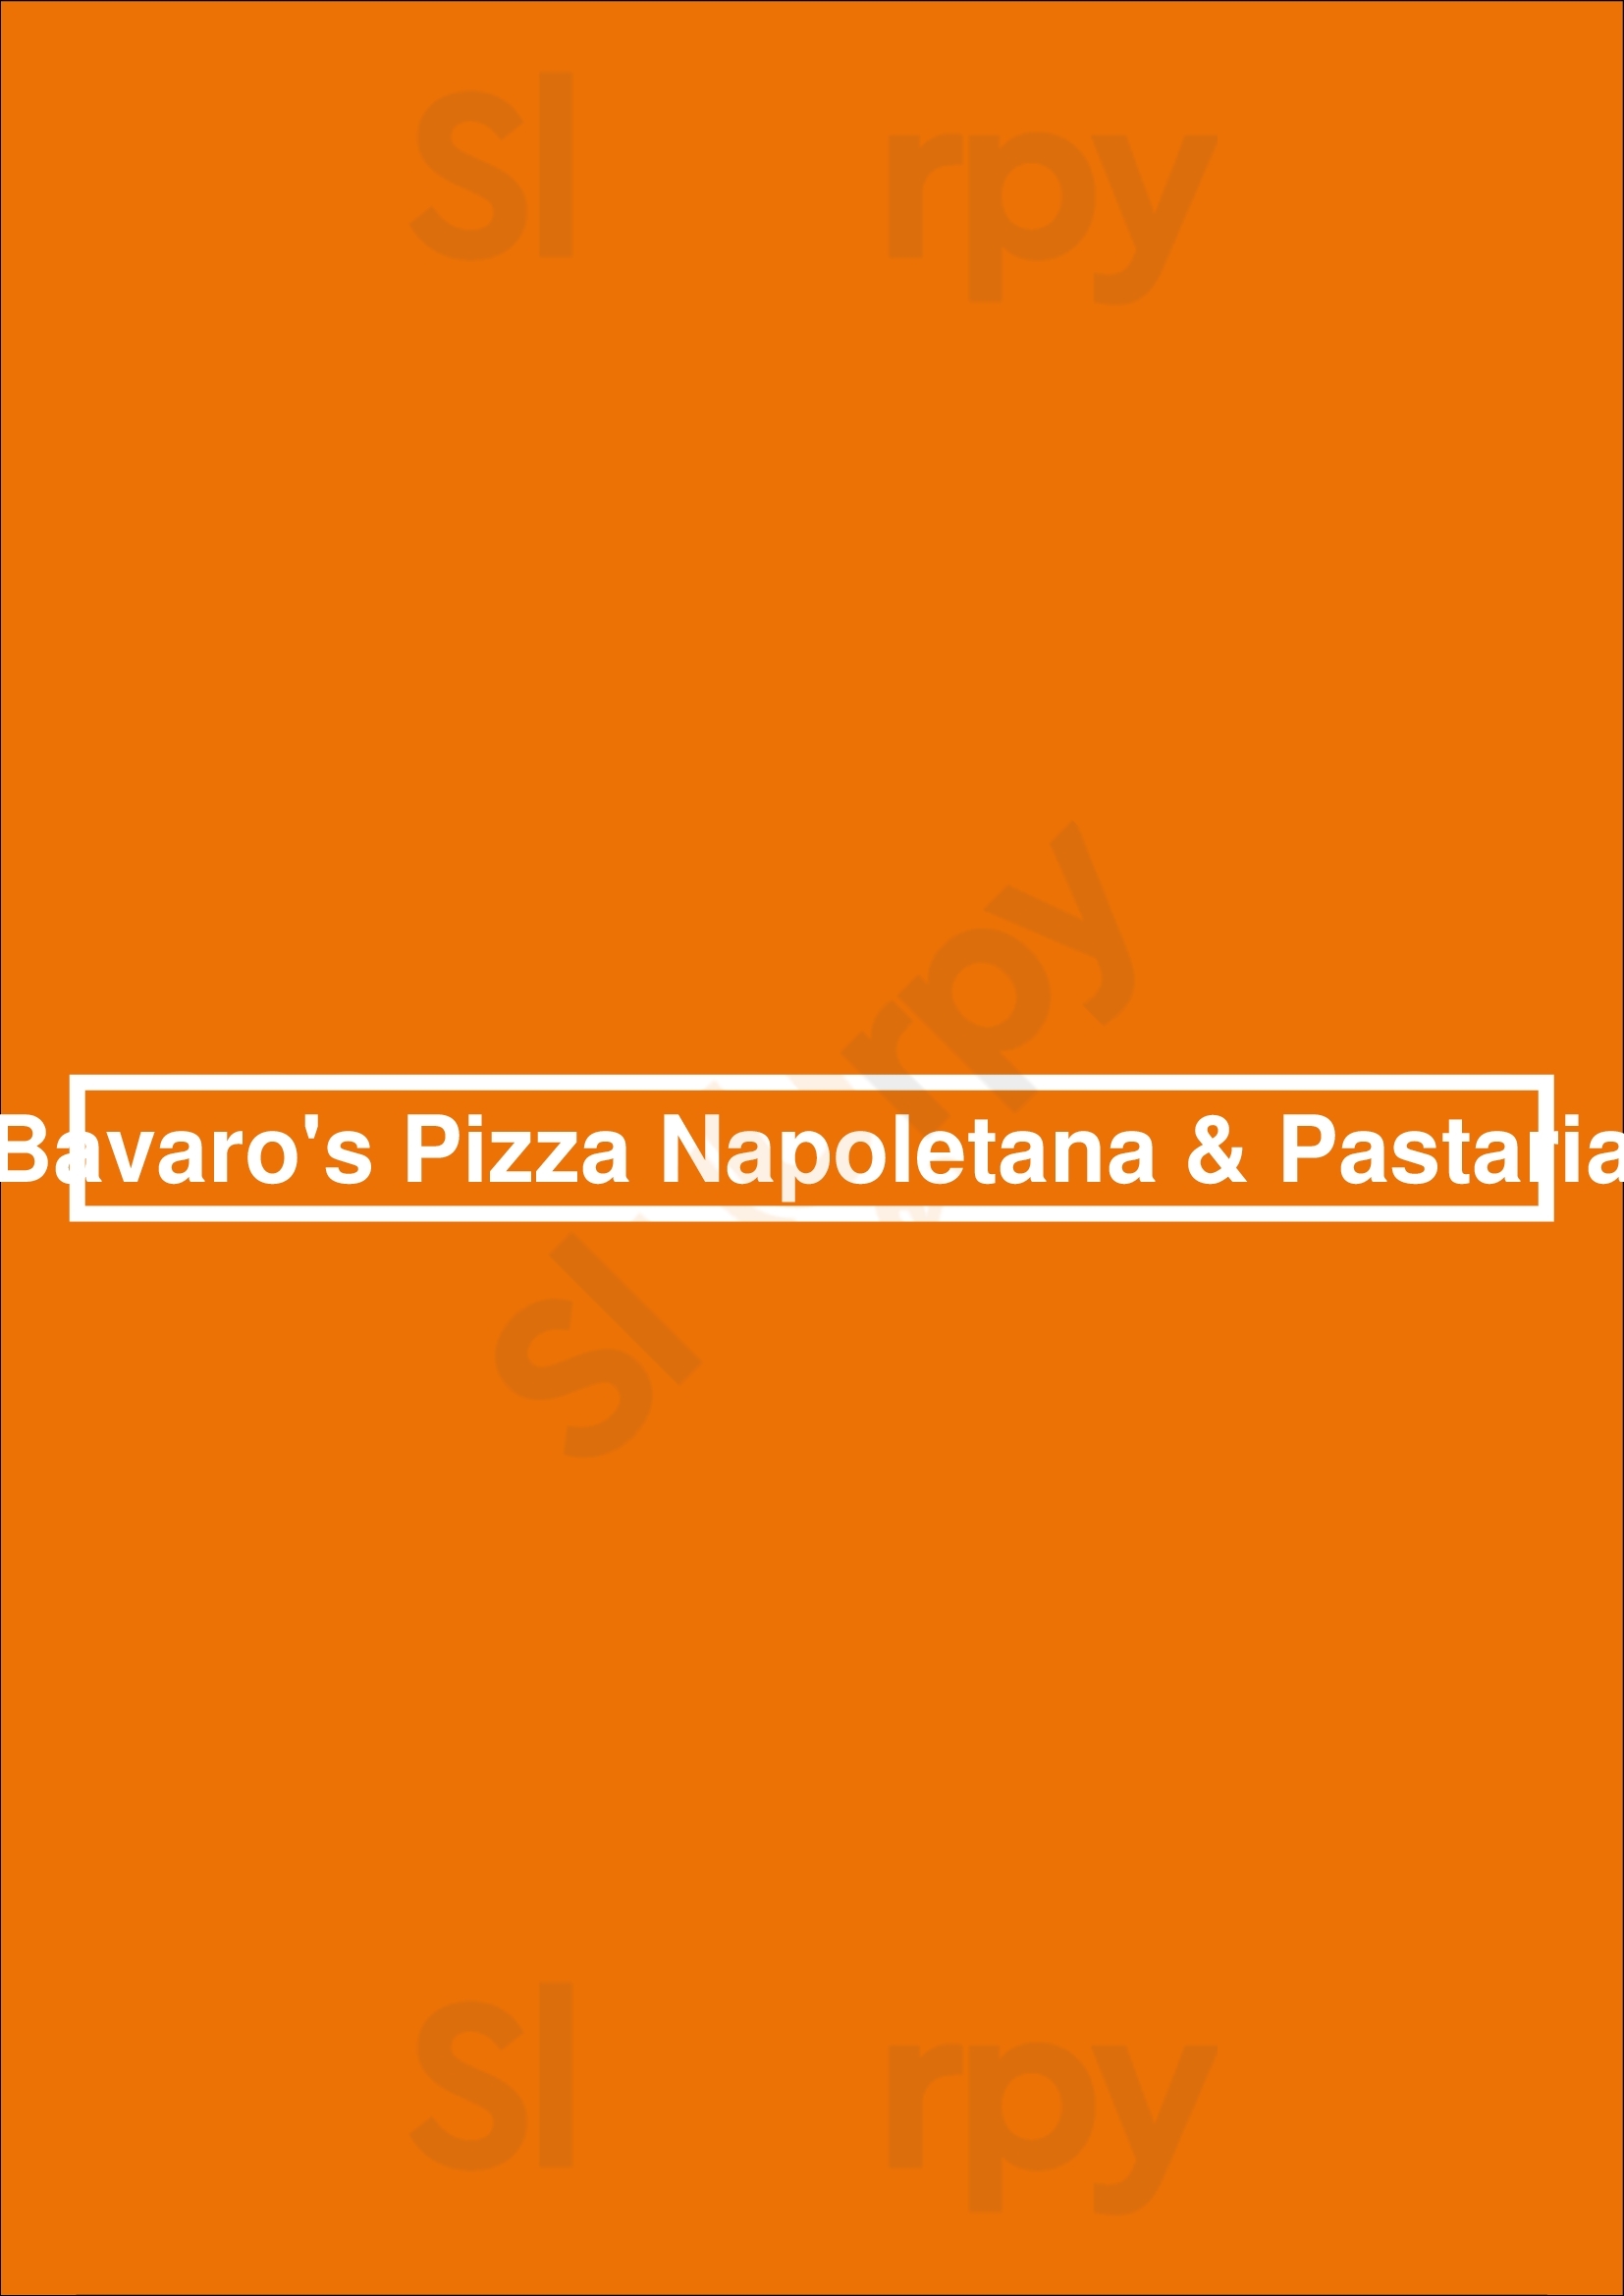 Bavaro's Pizza Napoletana & Pastaria Tampa Menu - 1